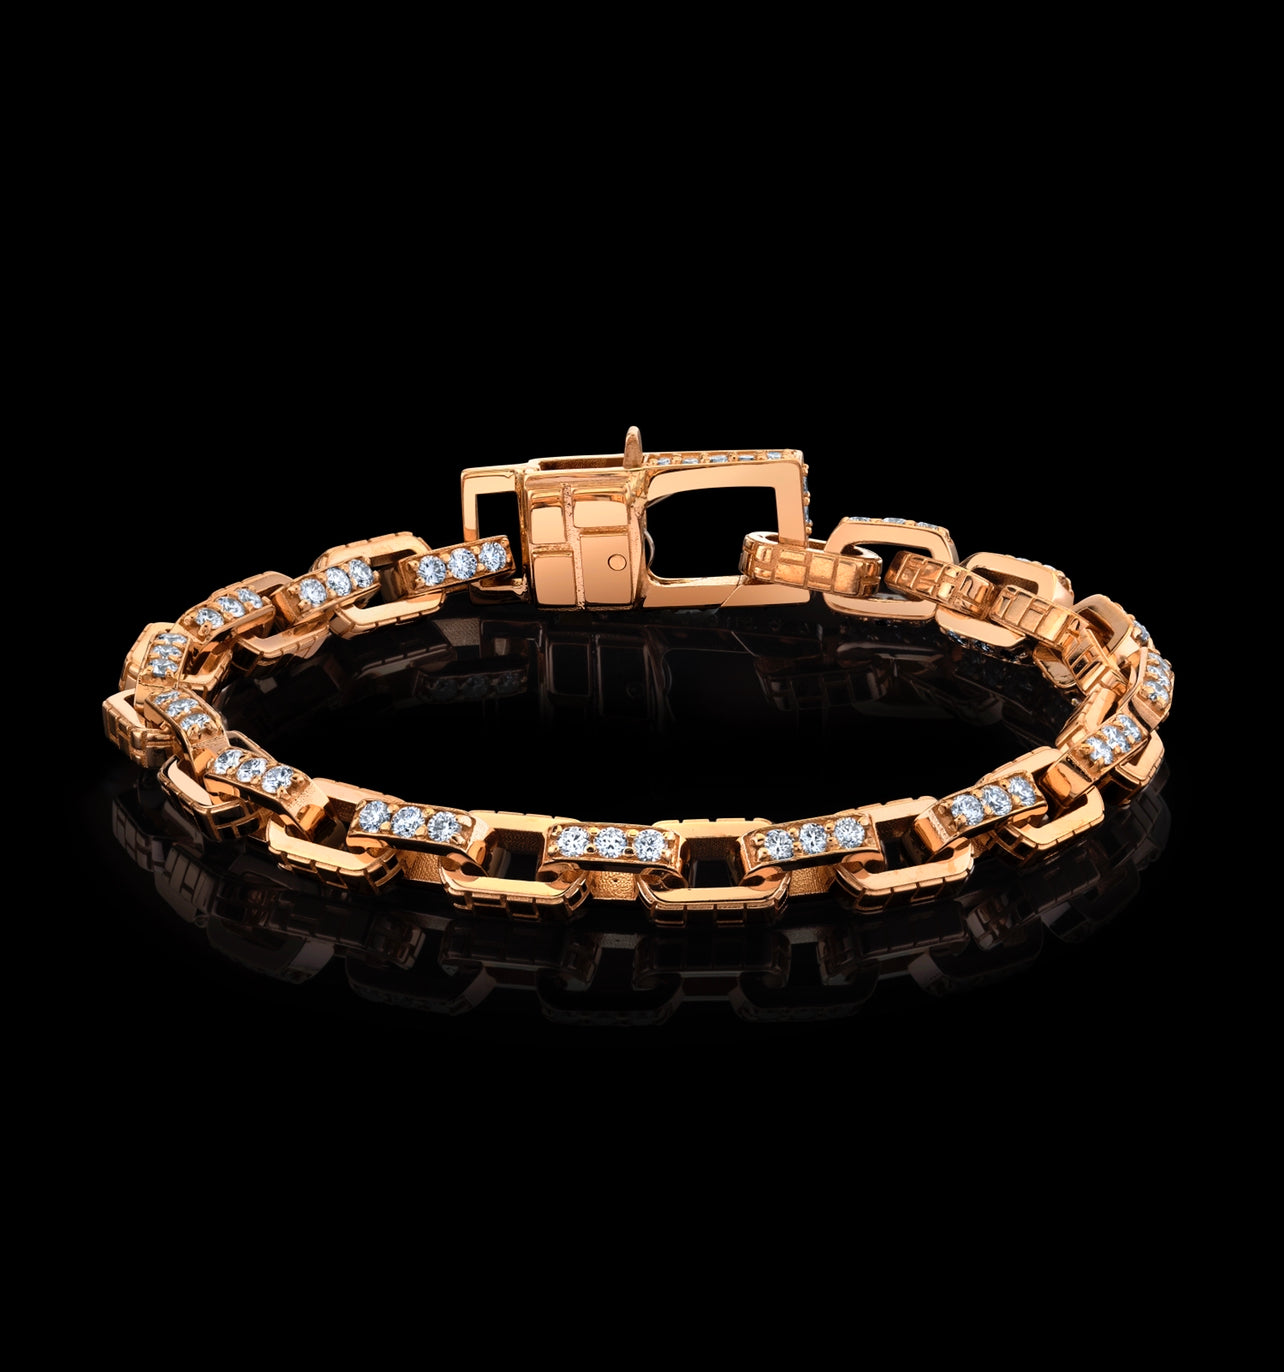 Signature Collection ‘XL’ Link Bracelet with diamonds.